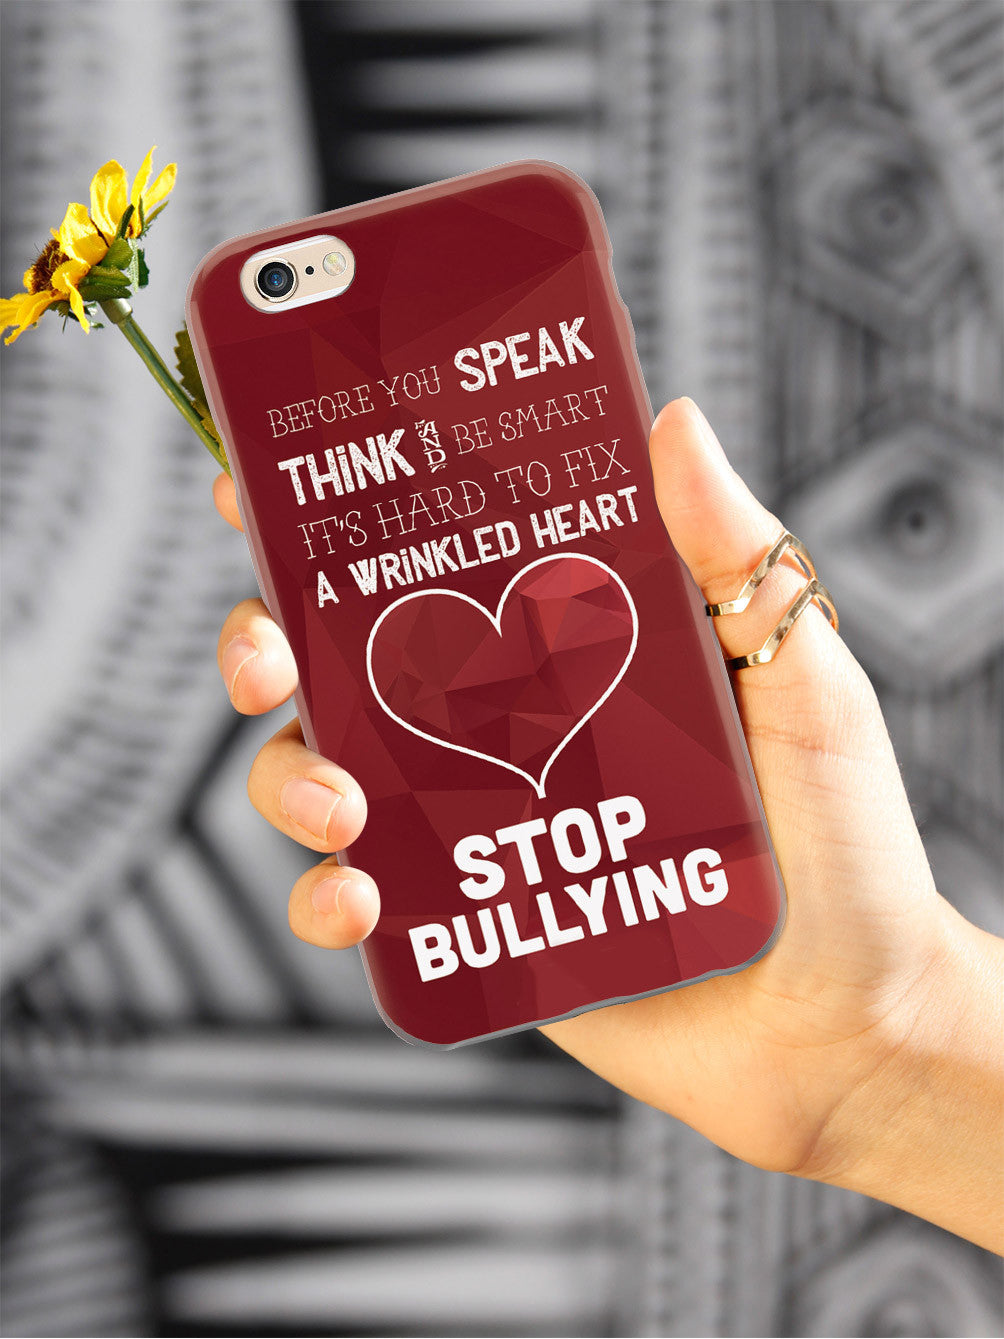 Stop Bullying - Think & Speak   Case